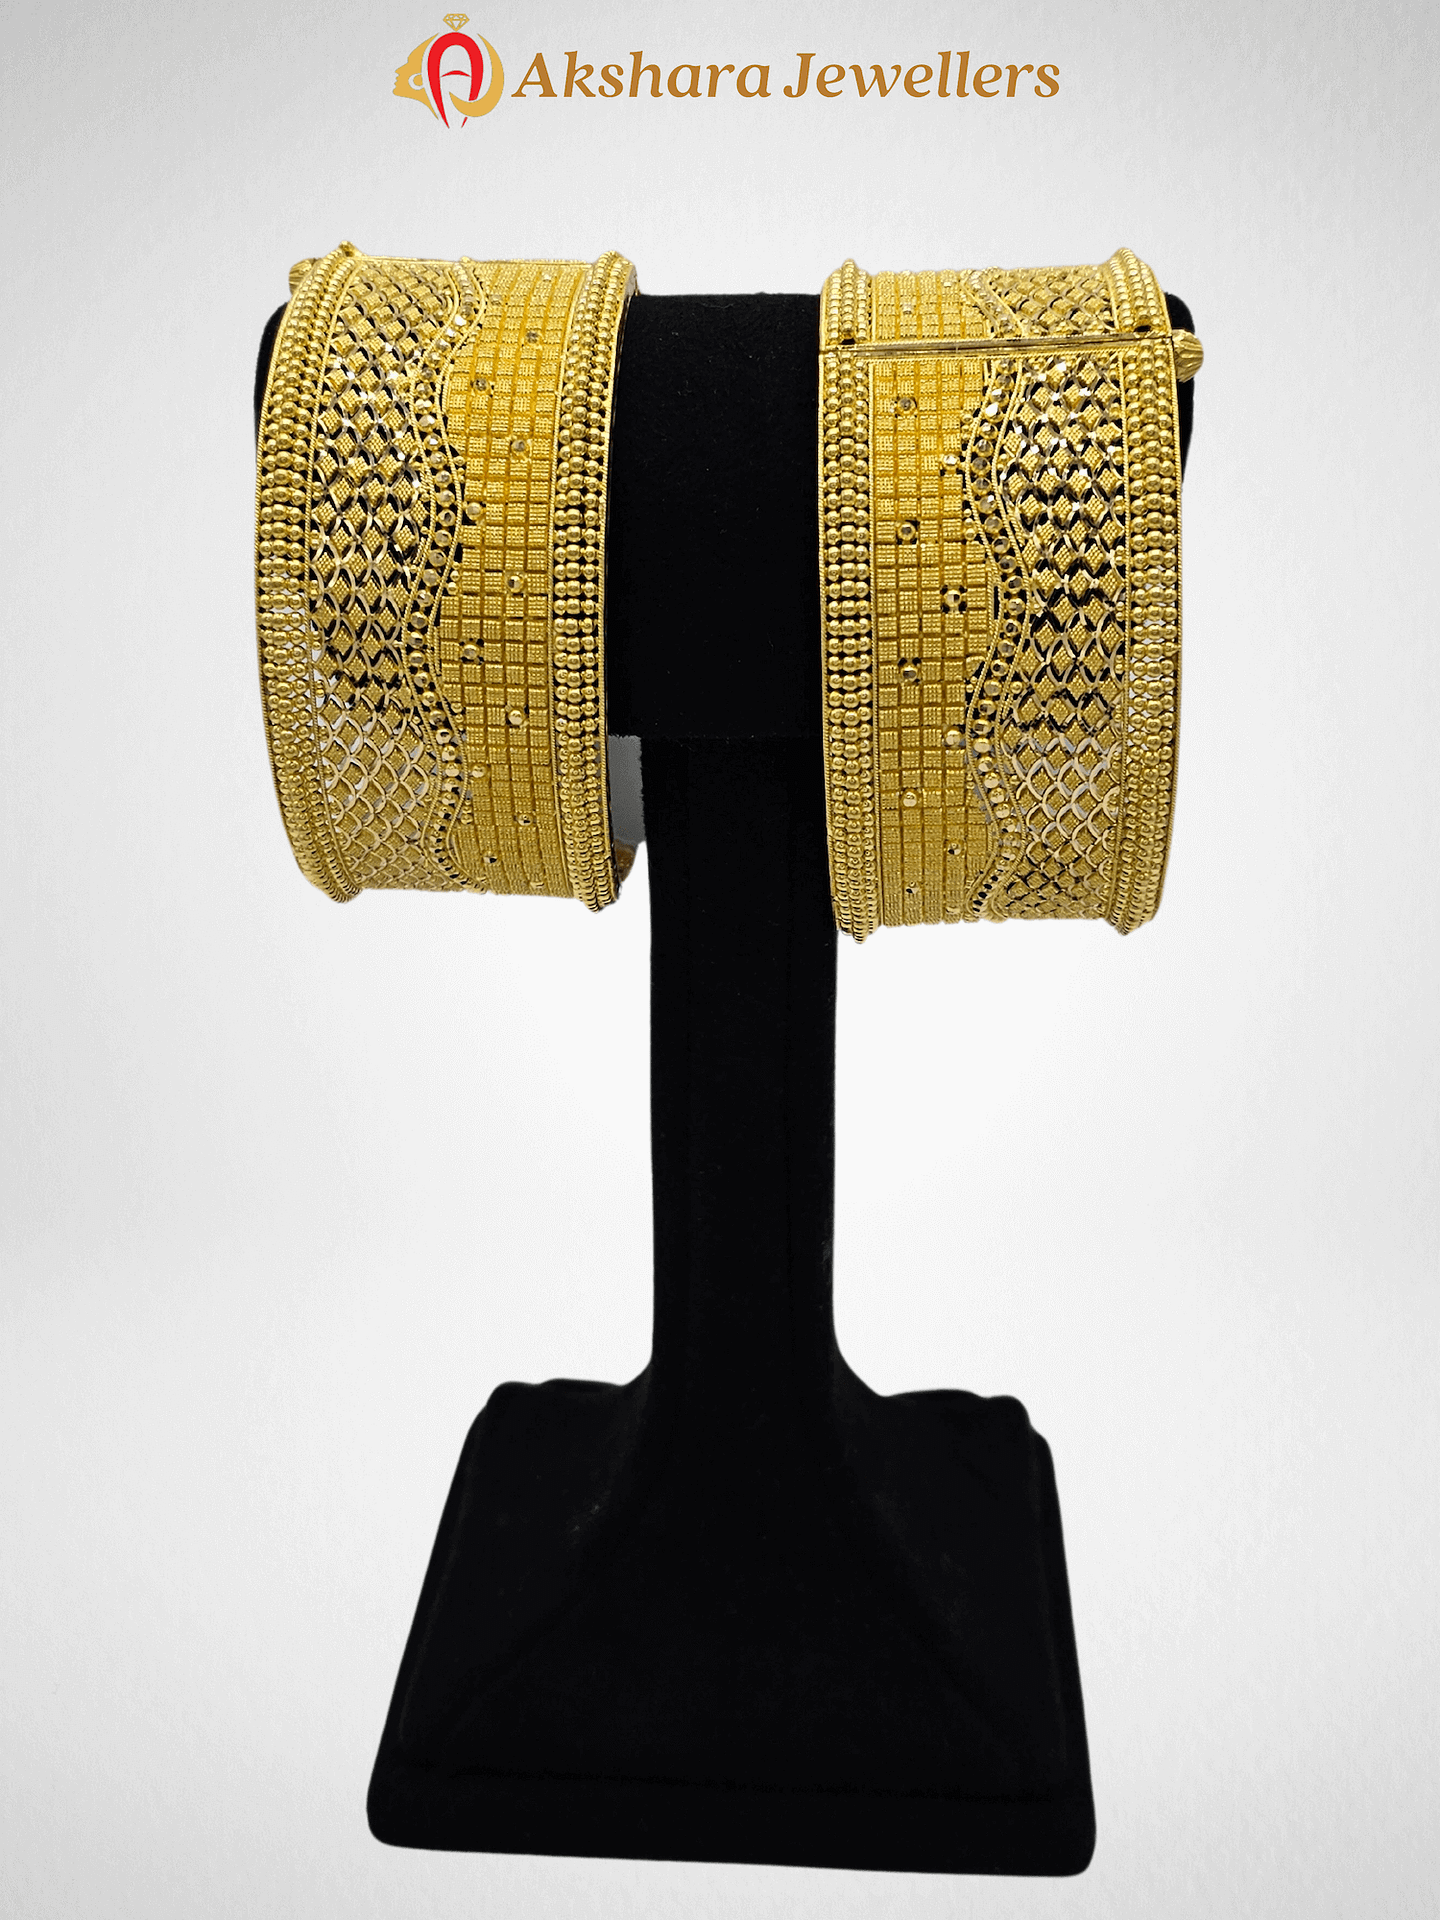 Bangels Gold design, Akshara Jewellers, Sydney Akshara Jewellers